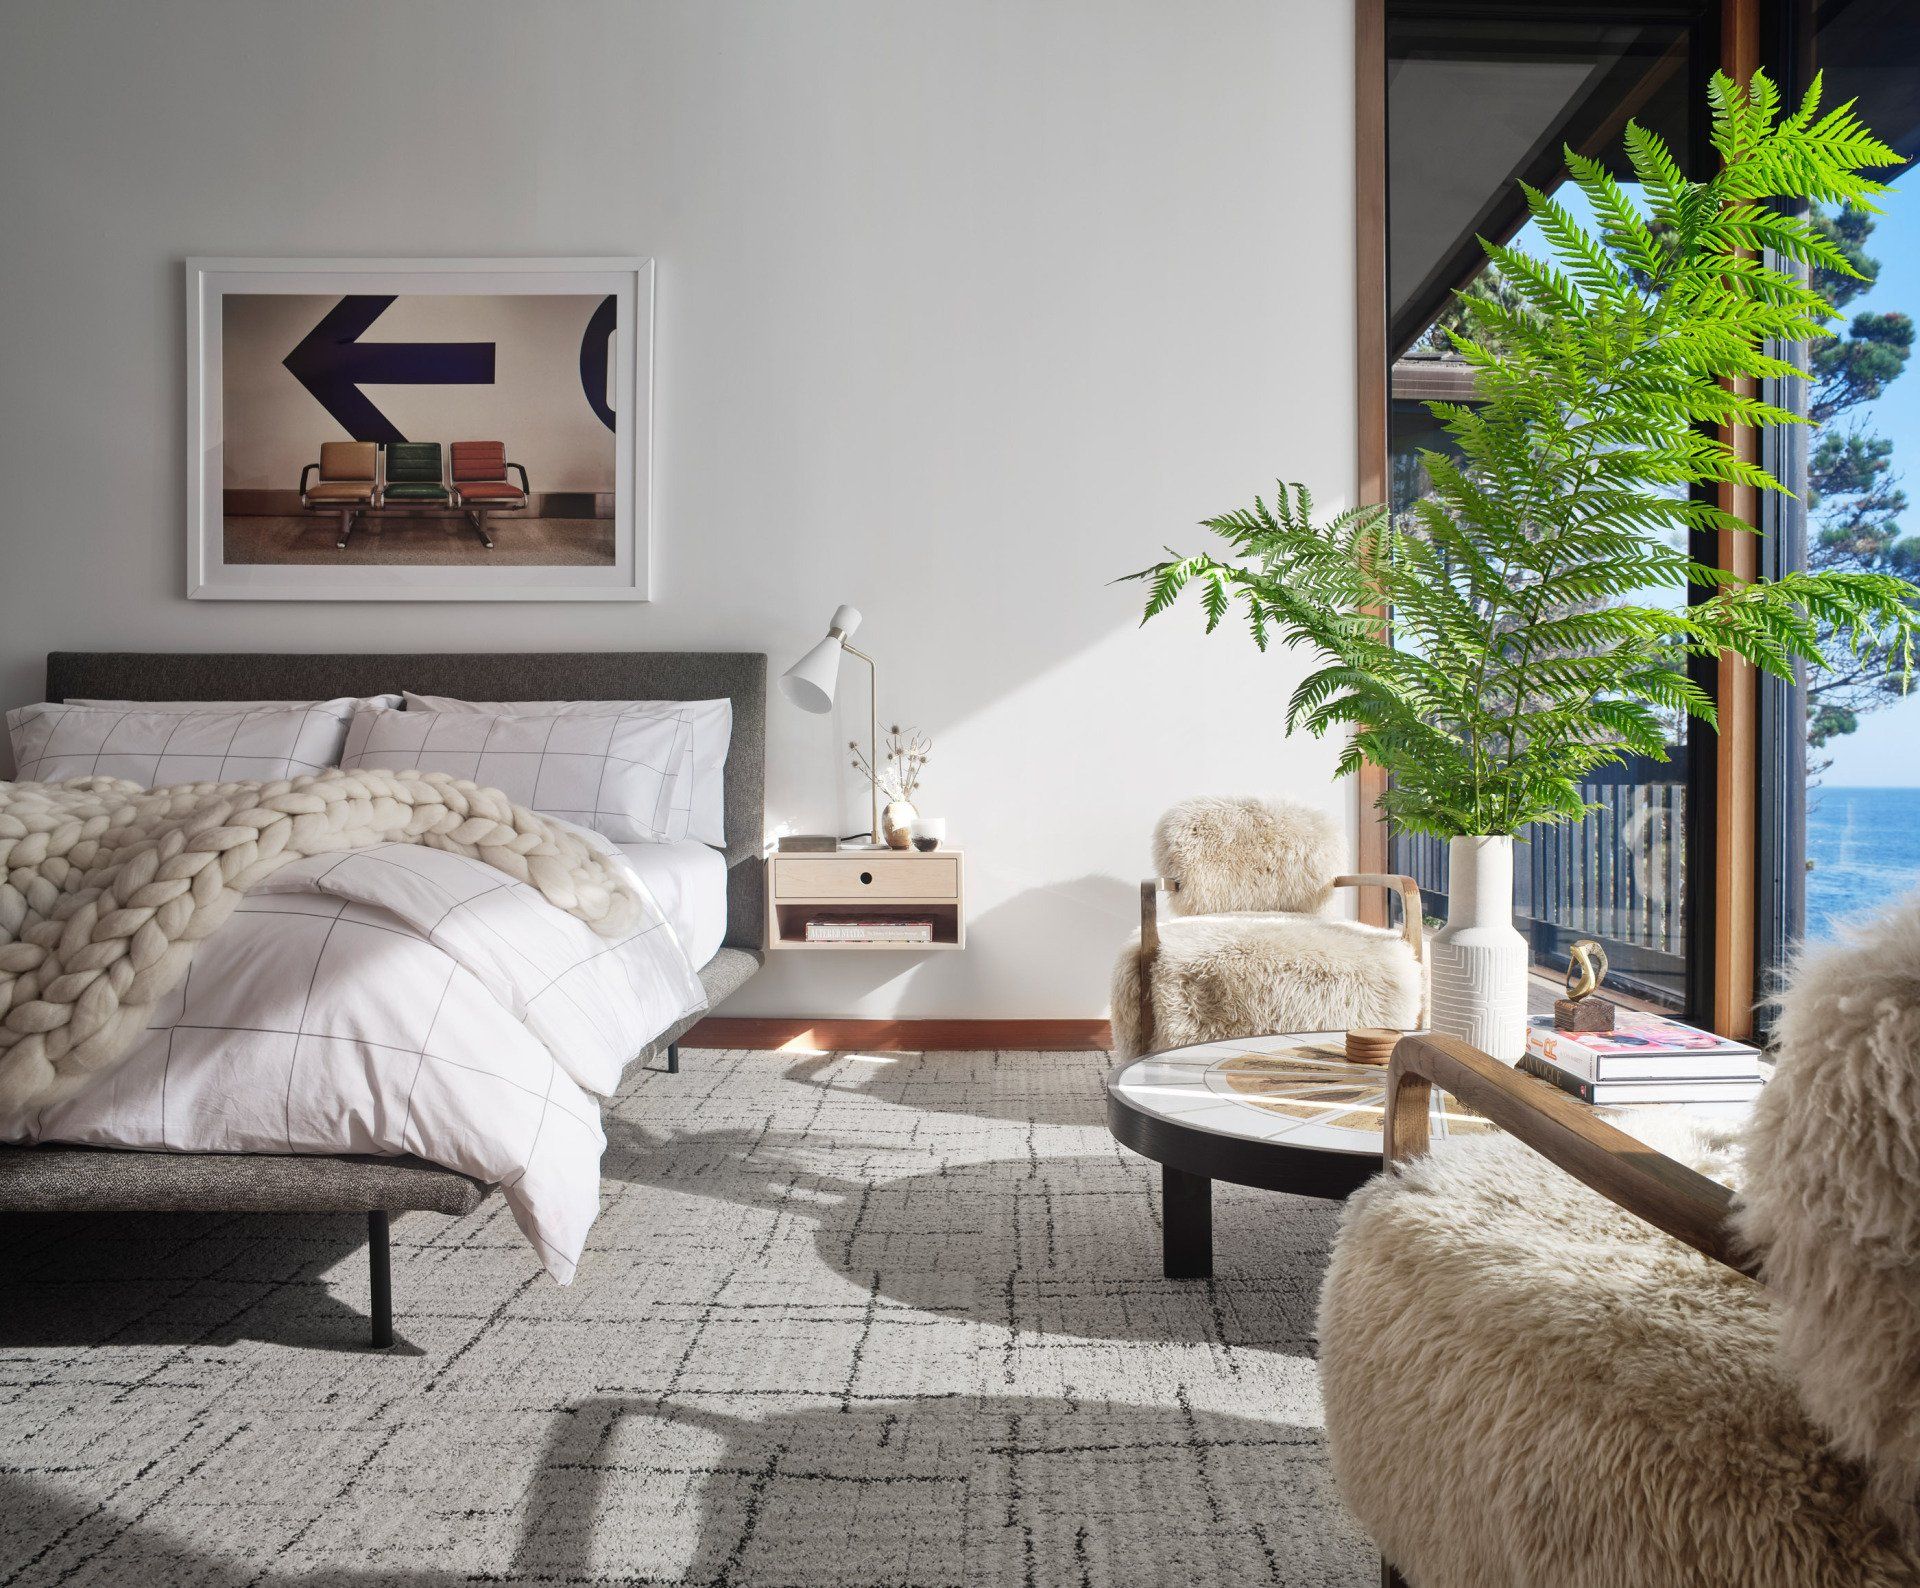 Bedroom in a Home in Northern California designed by Dakota DesignWorks